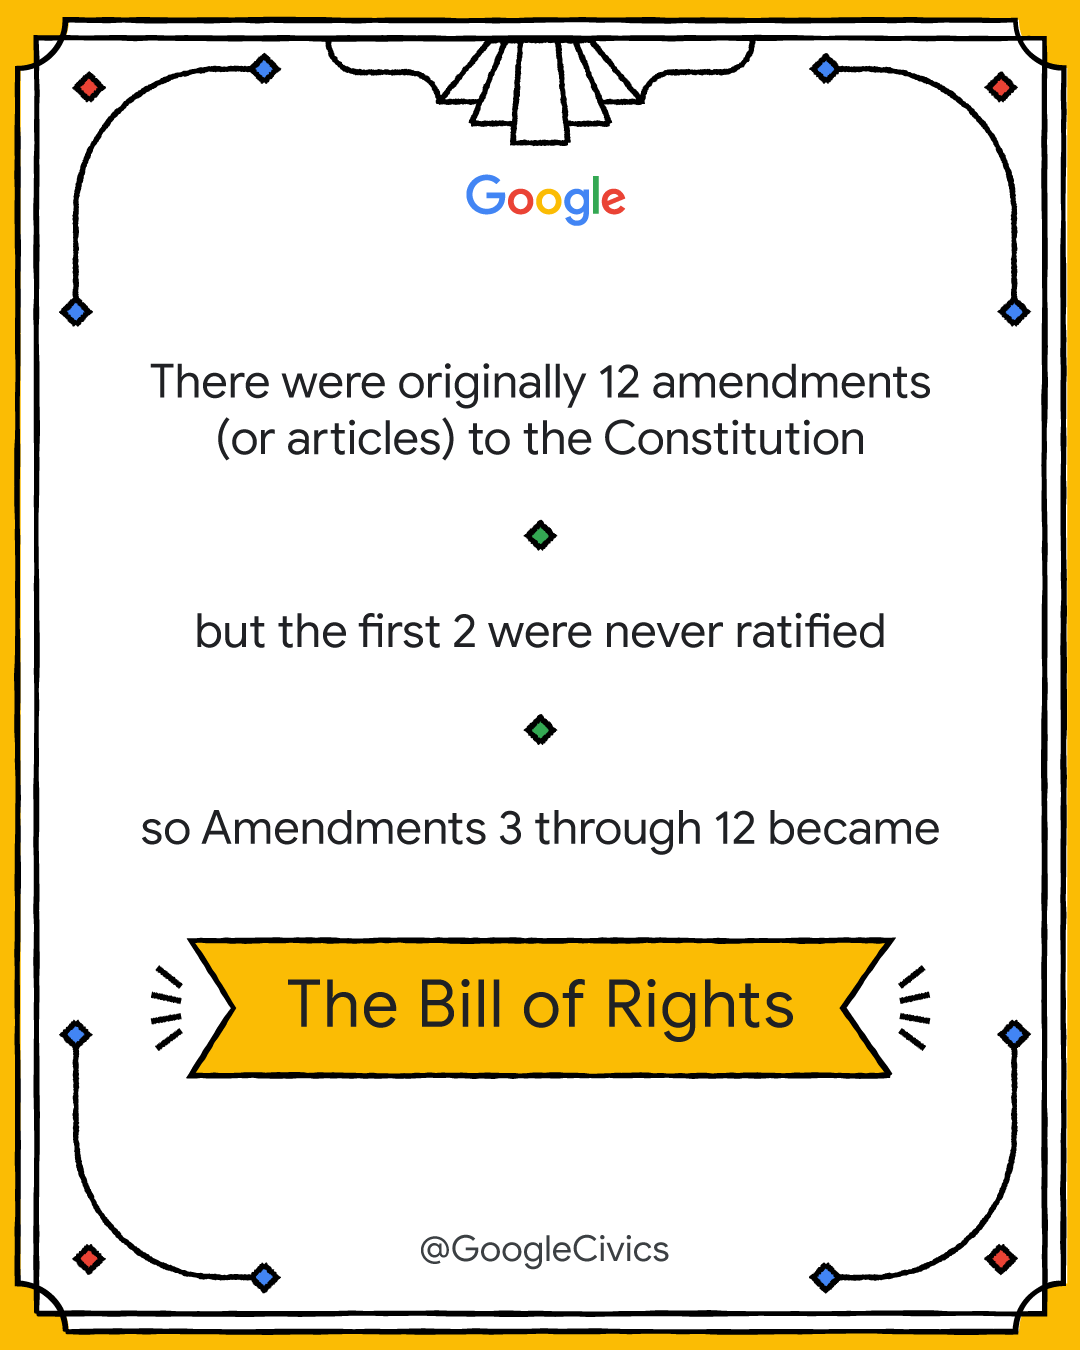 167-GCV-Dec.-15-Bill-of-Rights-Day-TW-Thread-(Design)-4-DL.png